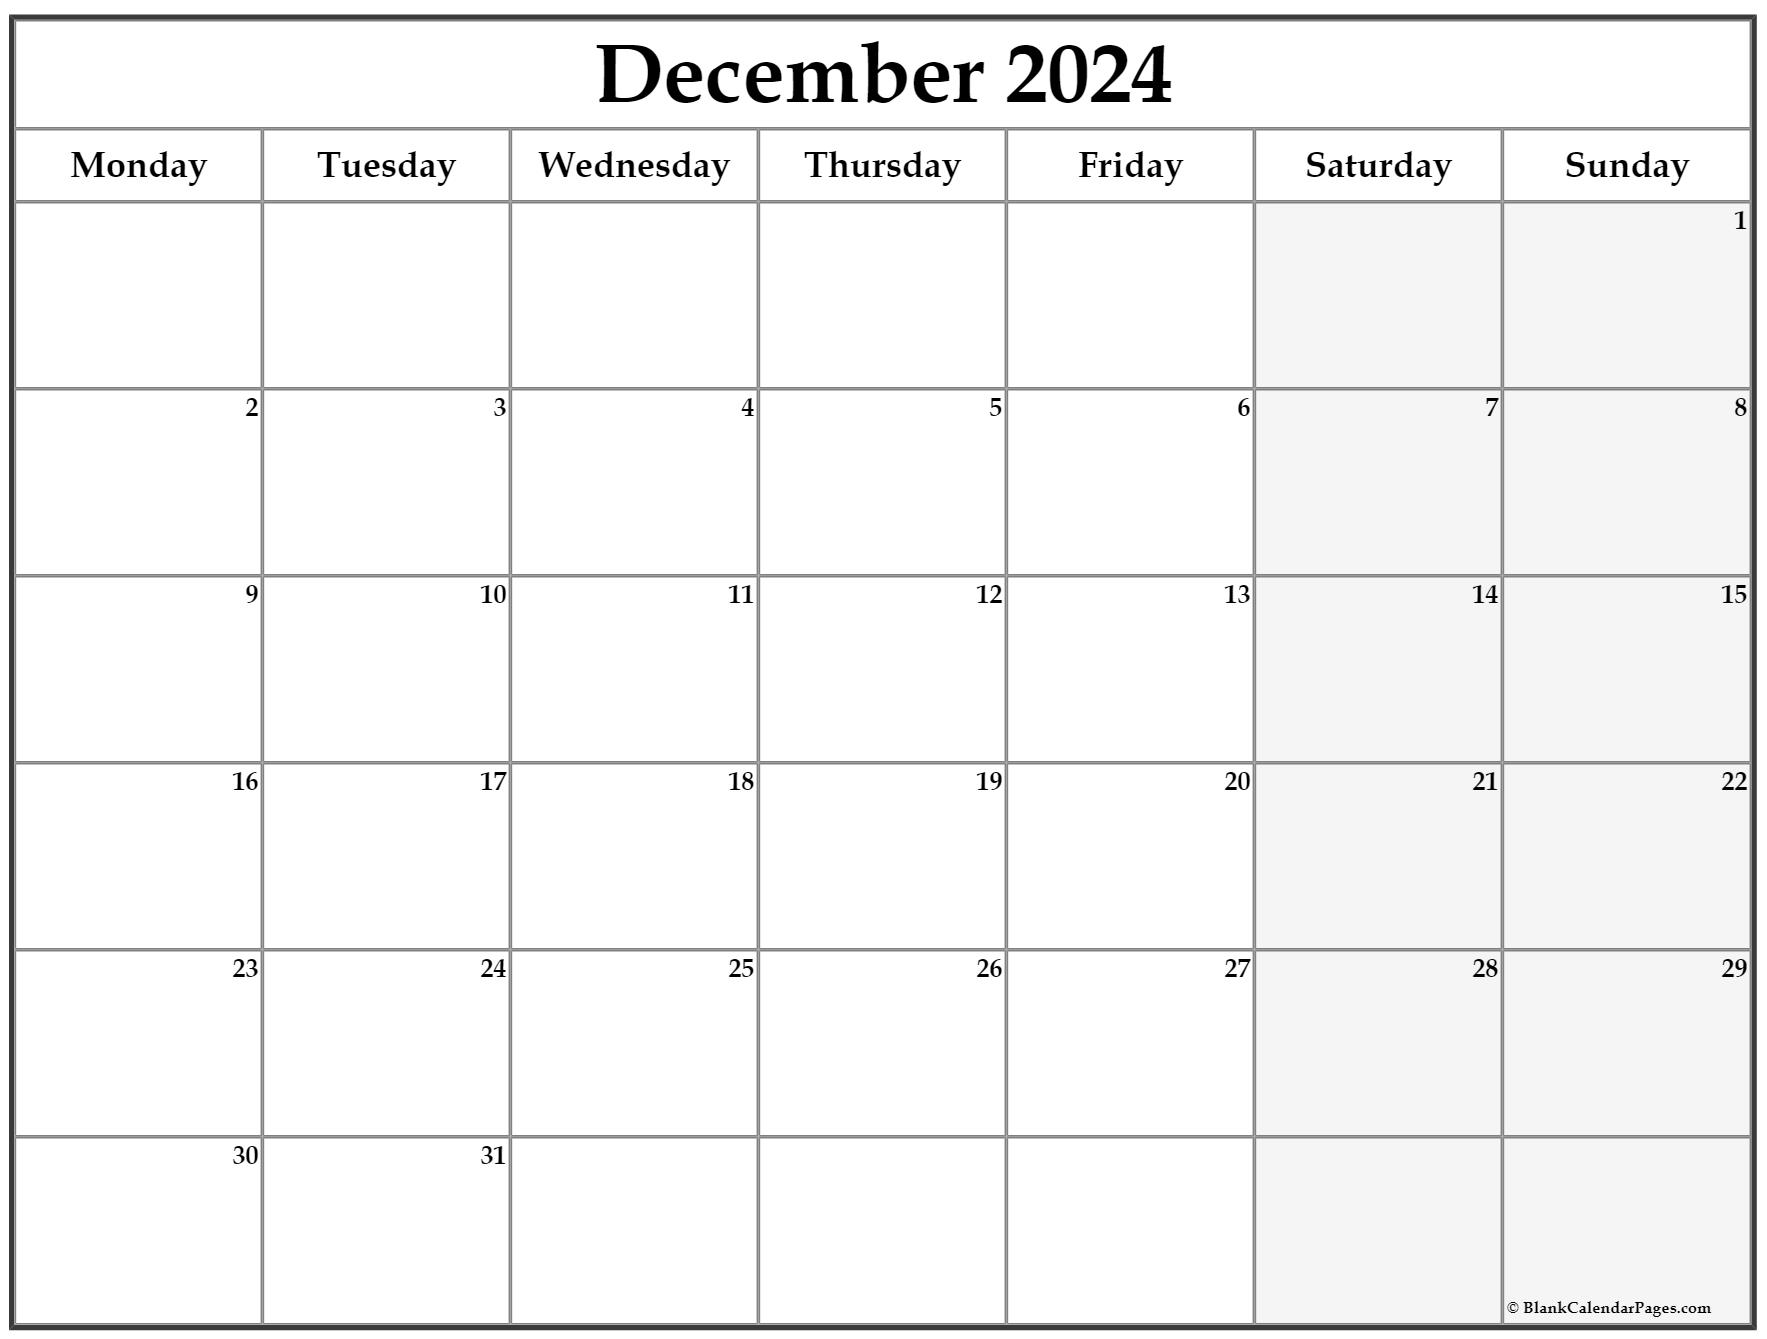 December 2021 Monday Calendar | Monday to Sunday